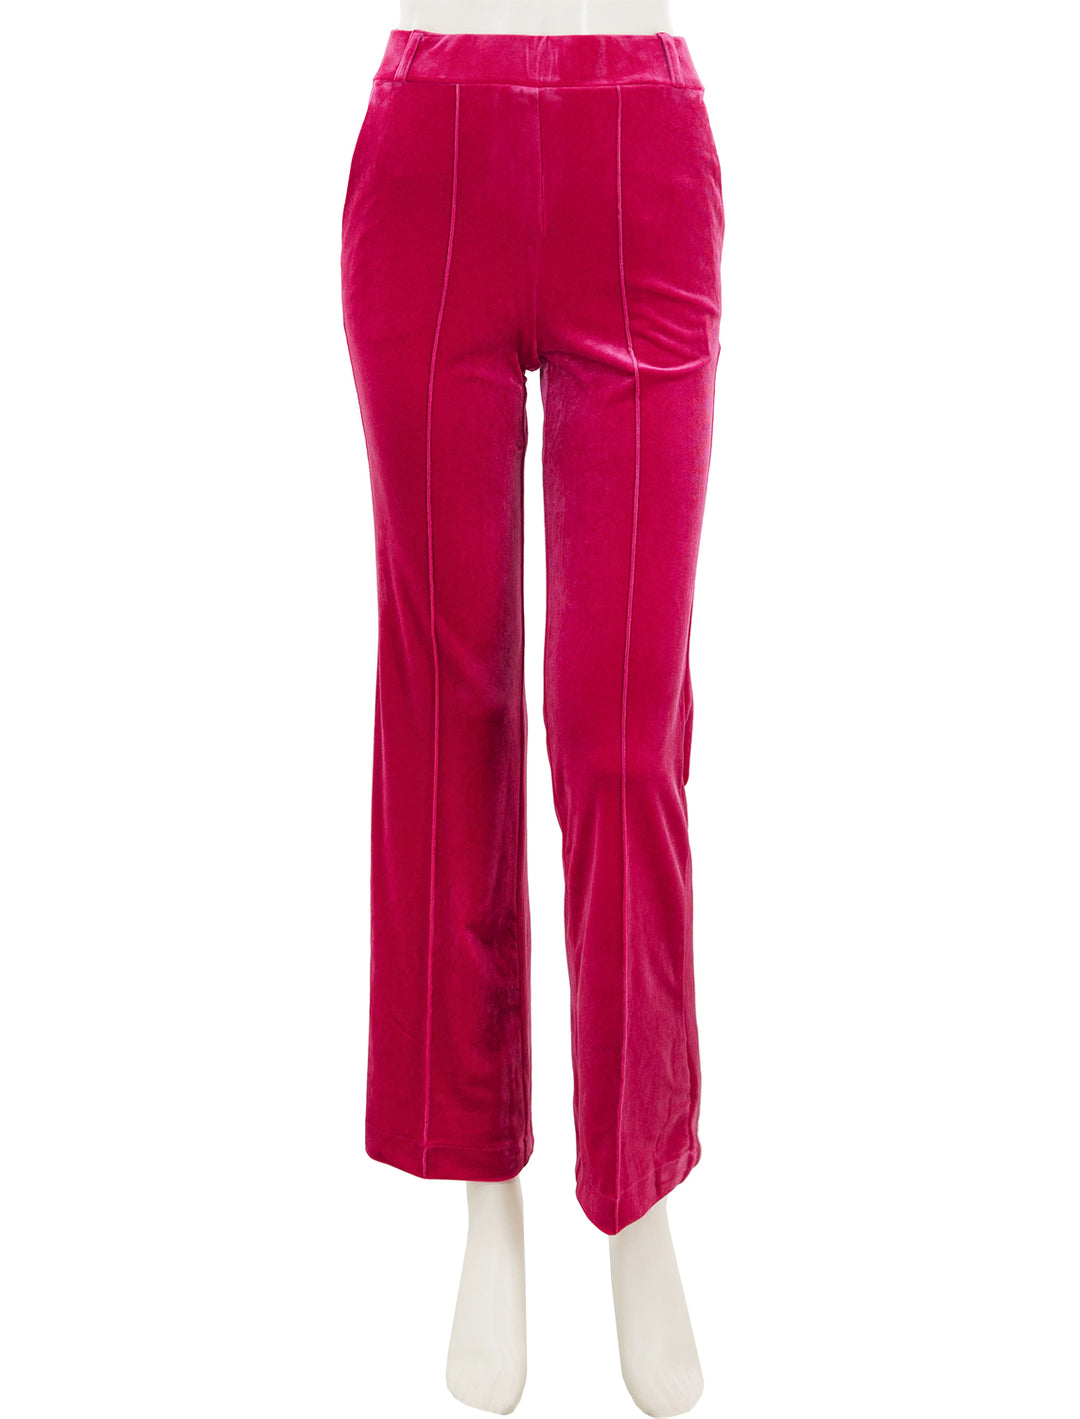 Front view of Vilagallo's carla pink velvet pants.